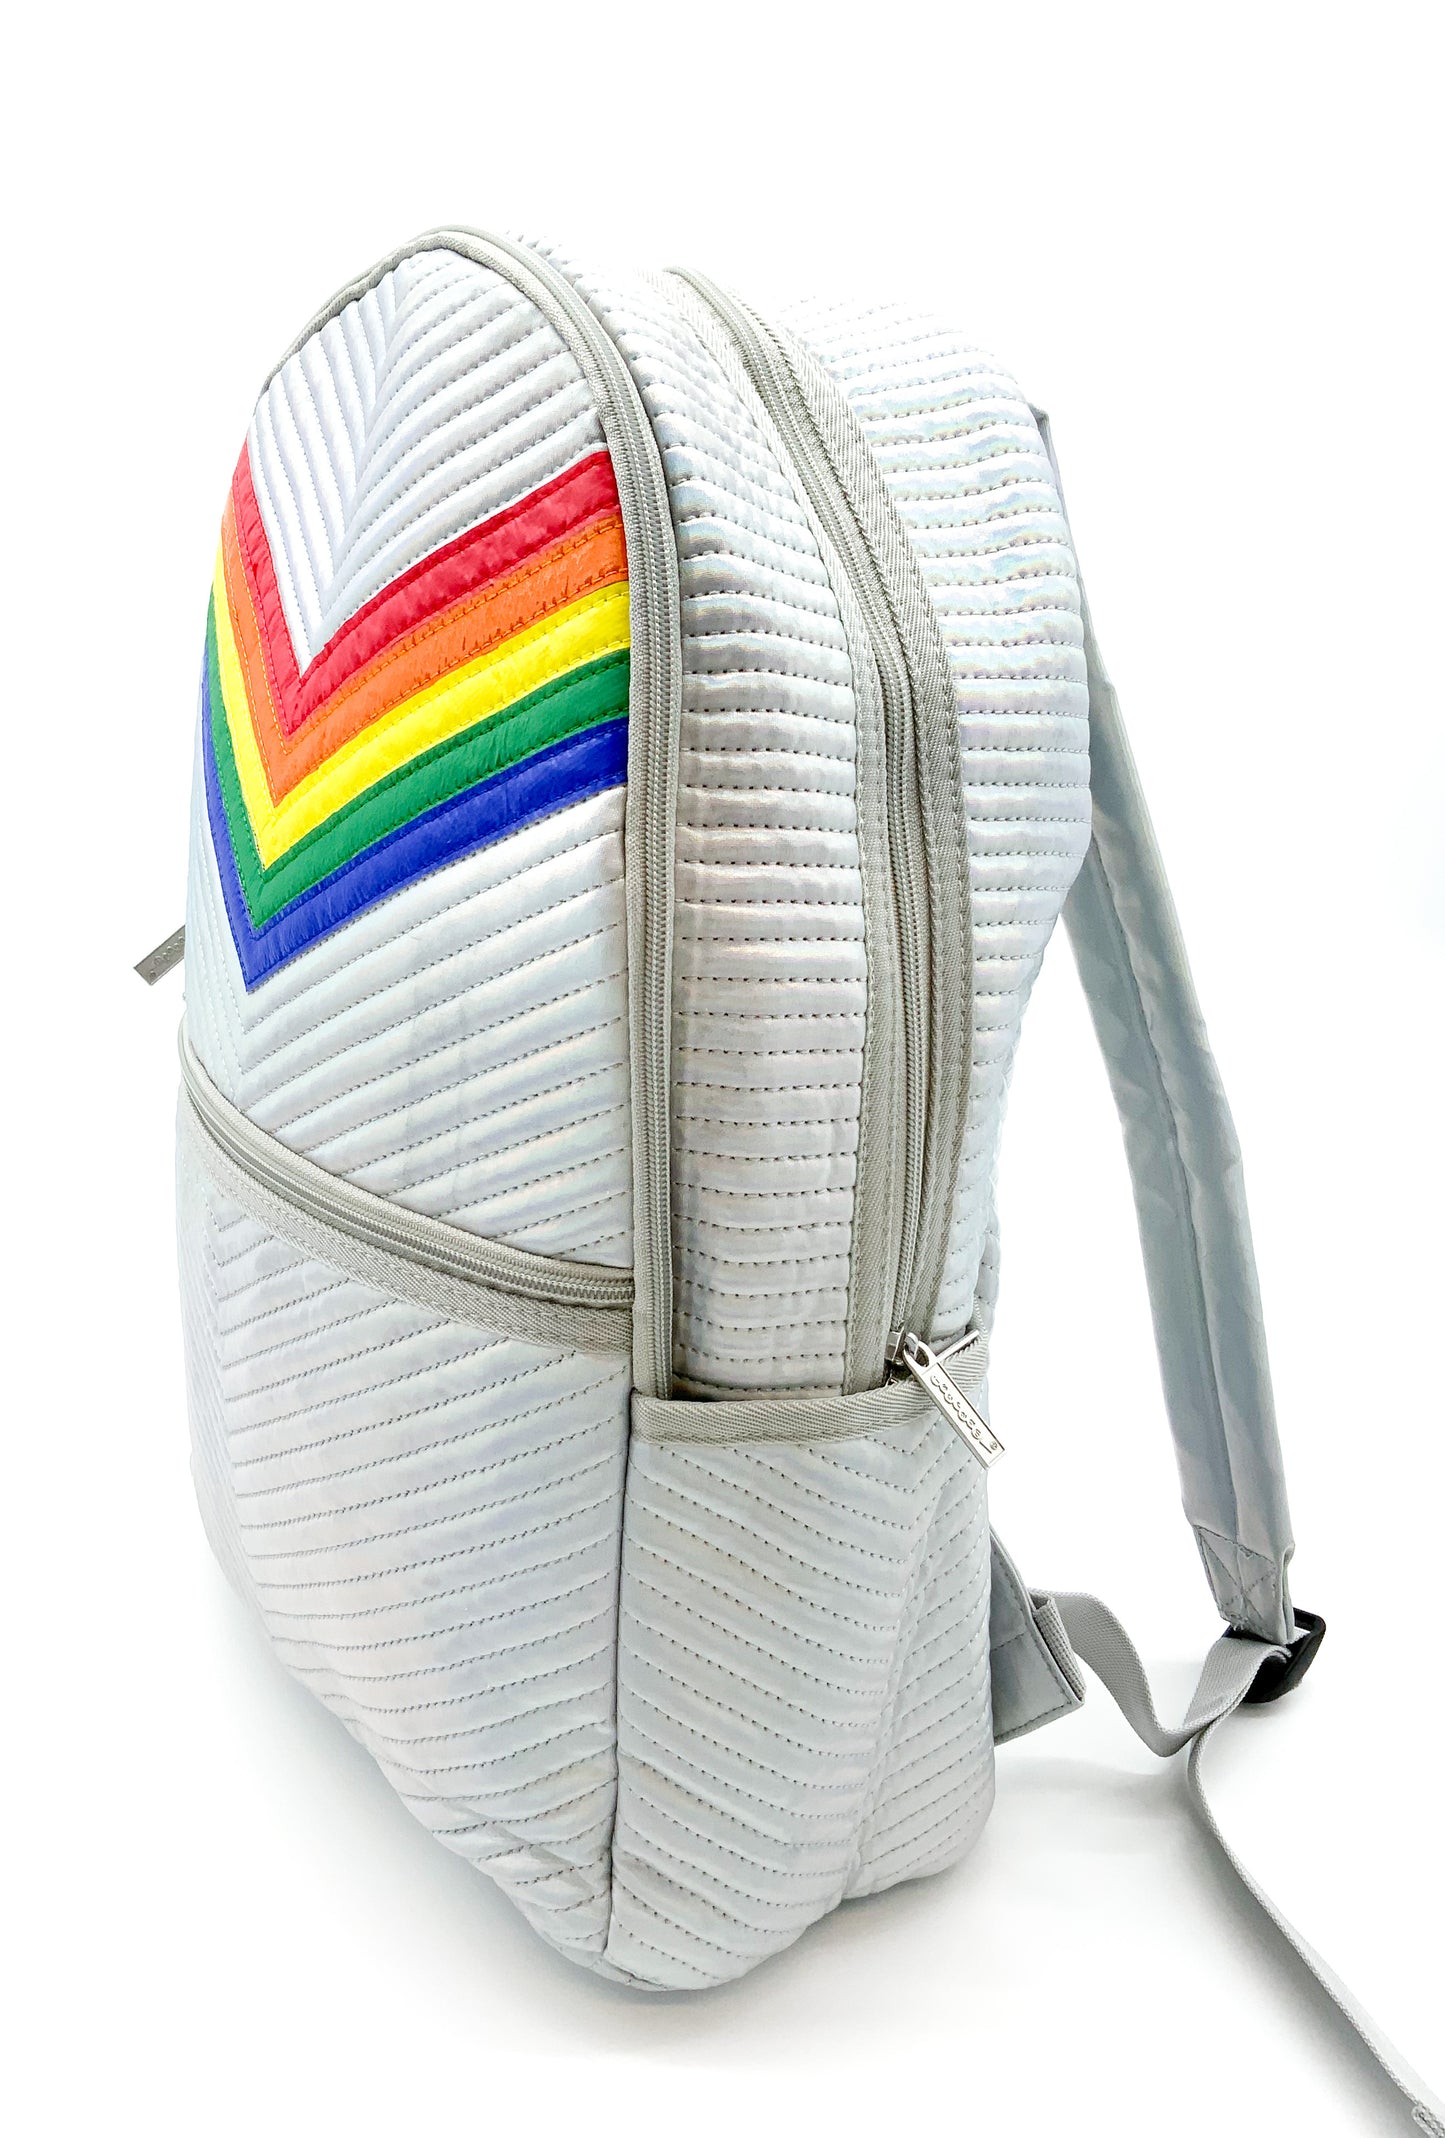 Rainbow Chevron Backpack